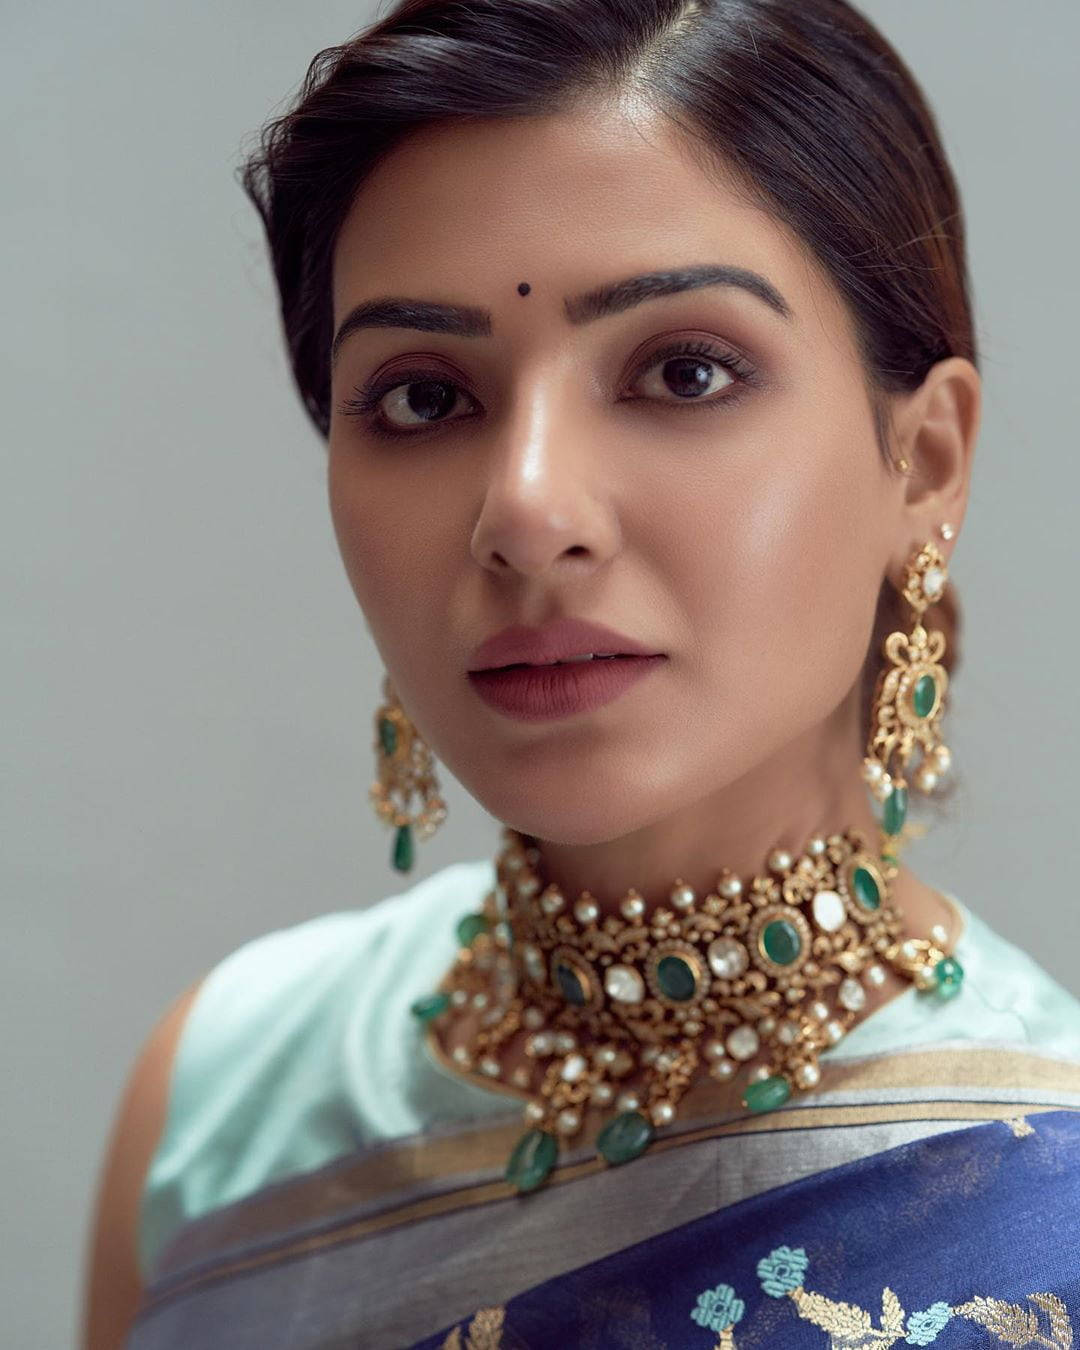 Samantha Stunning In A Blue Saree Close-up Background